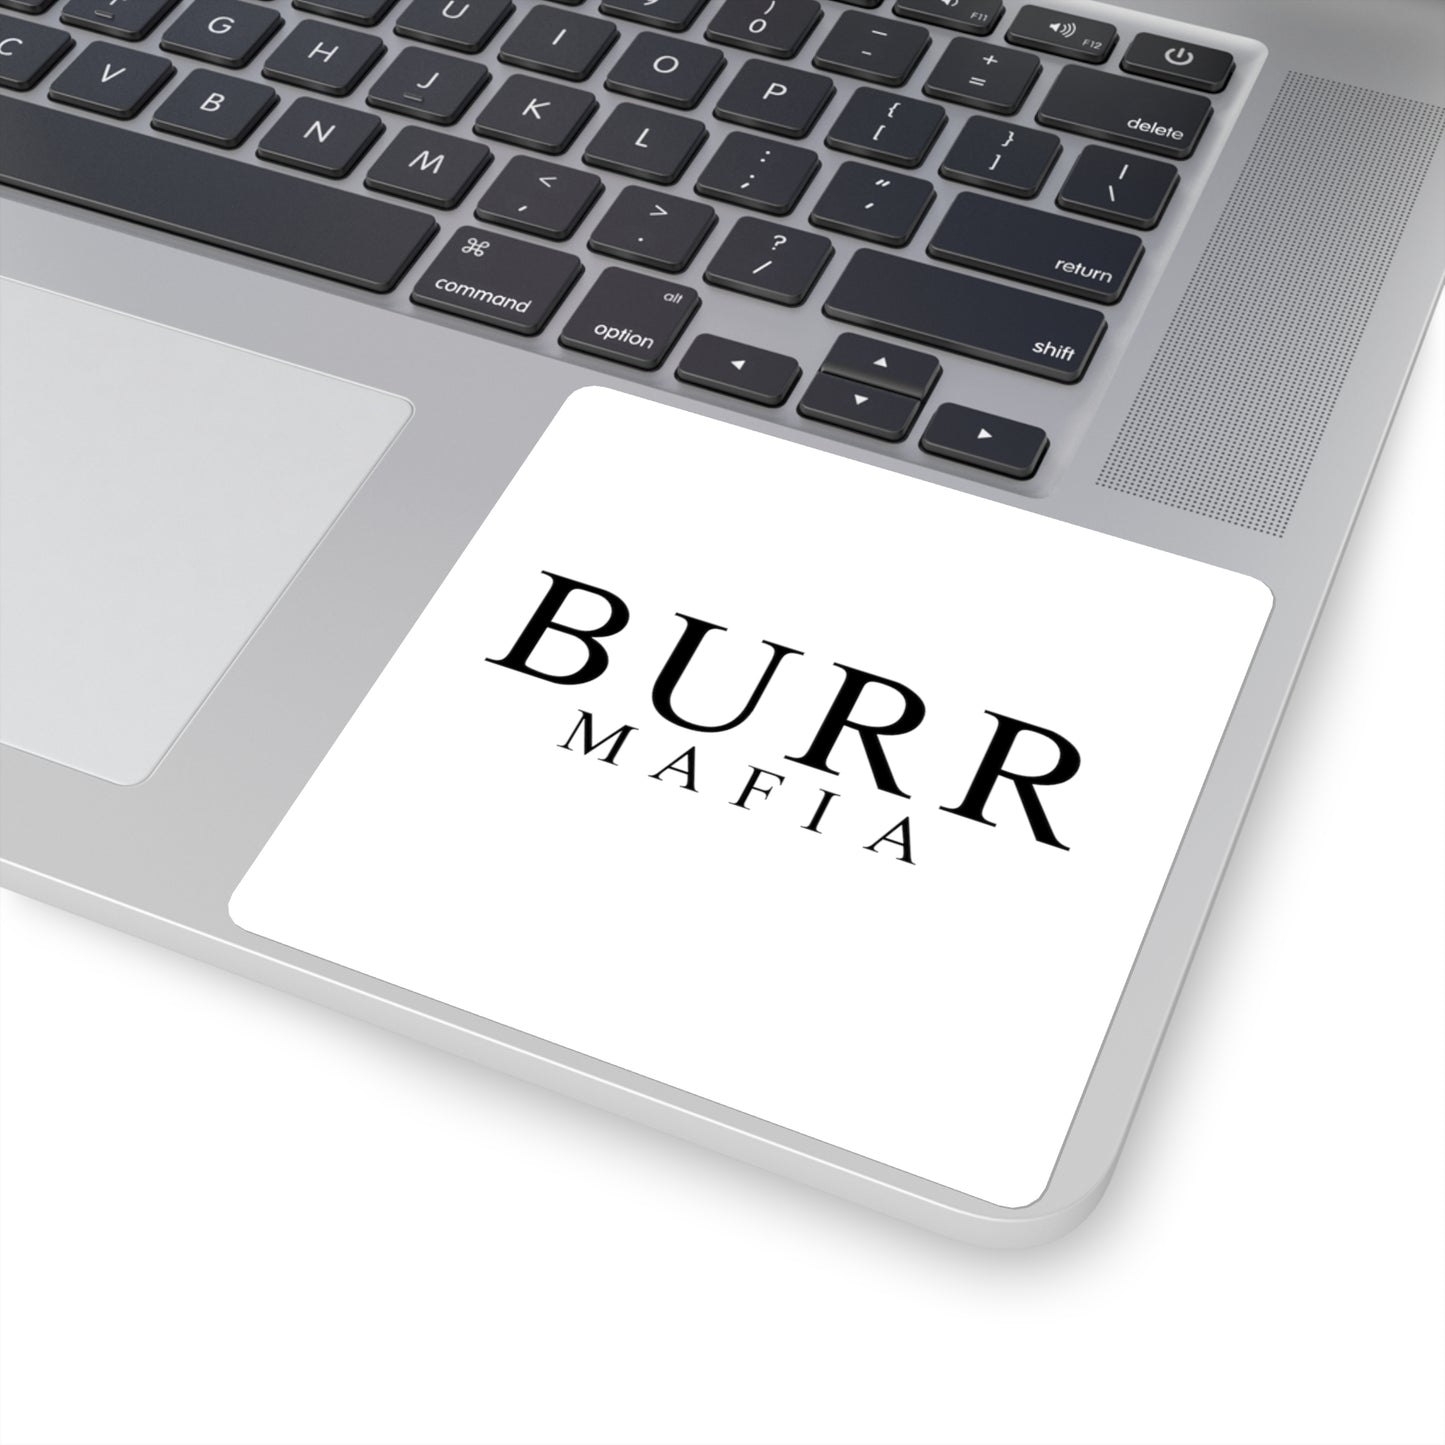 Burr Mafia Logo Sticker